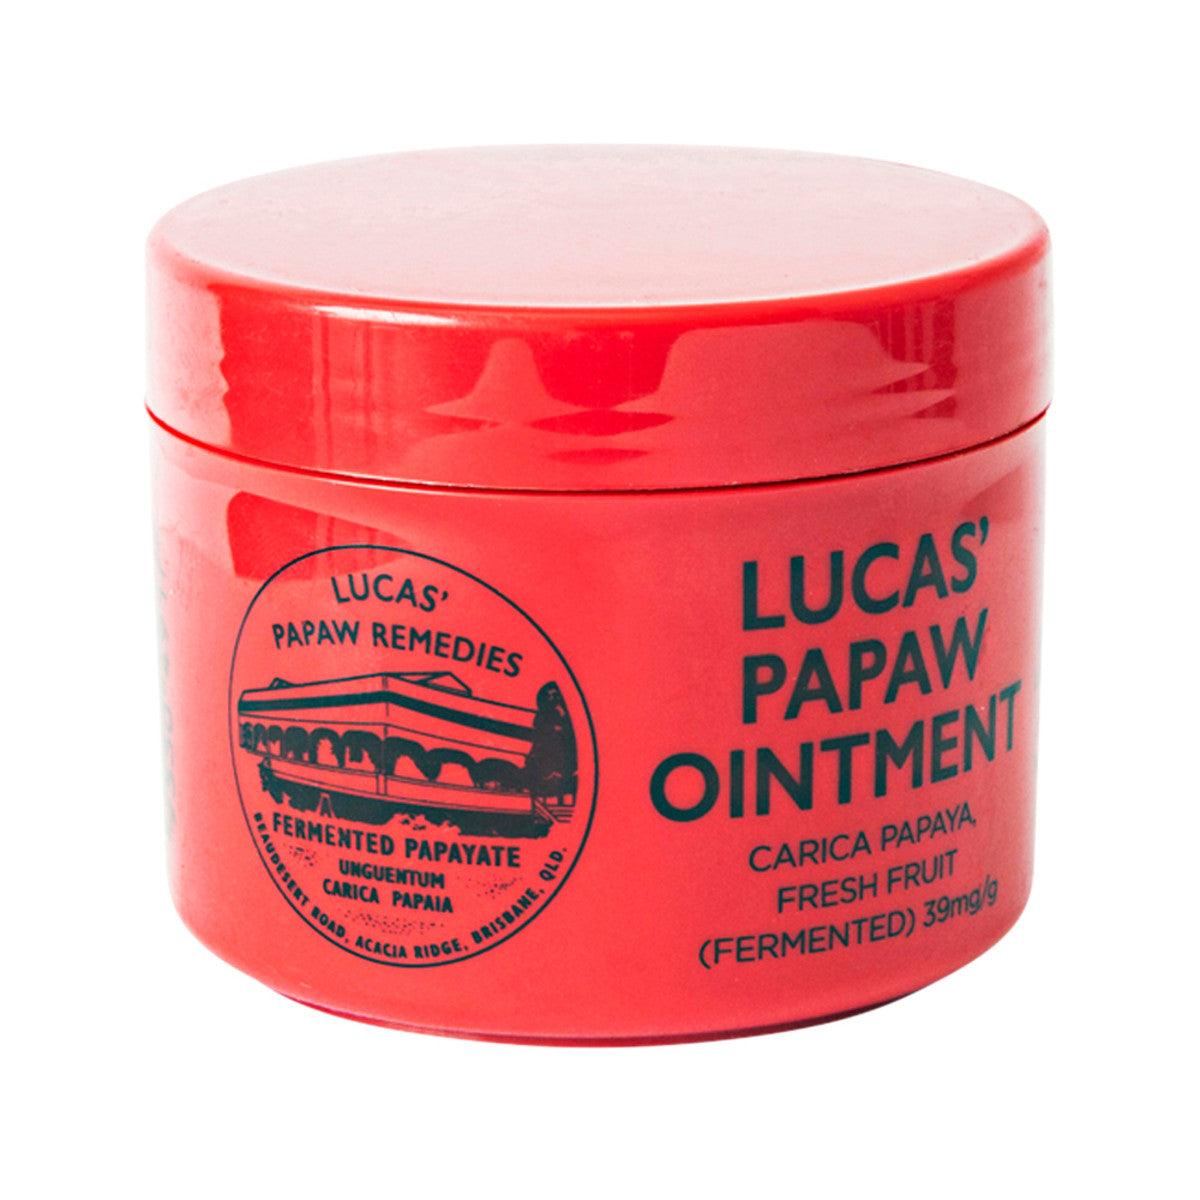 Lucas' Papaw Ointment 75g - QVM Vitamins™